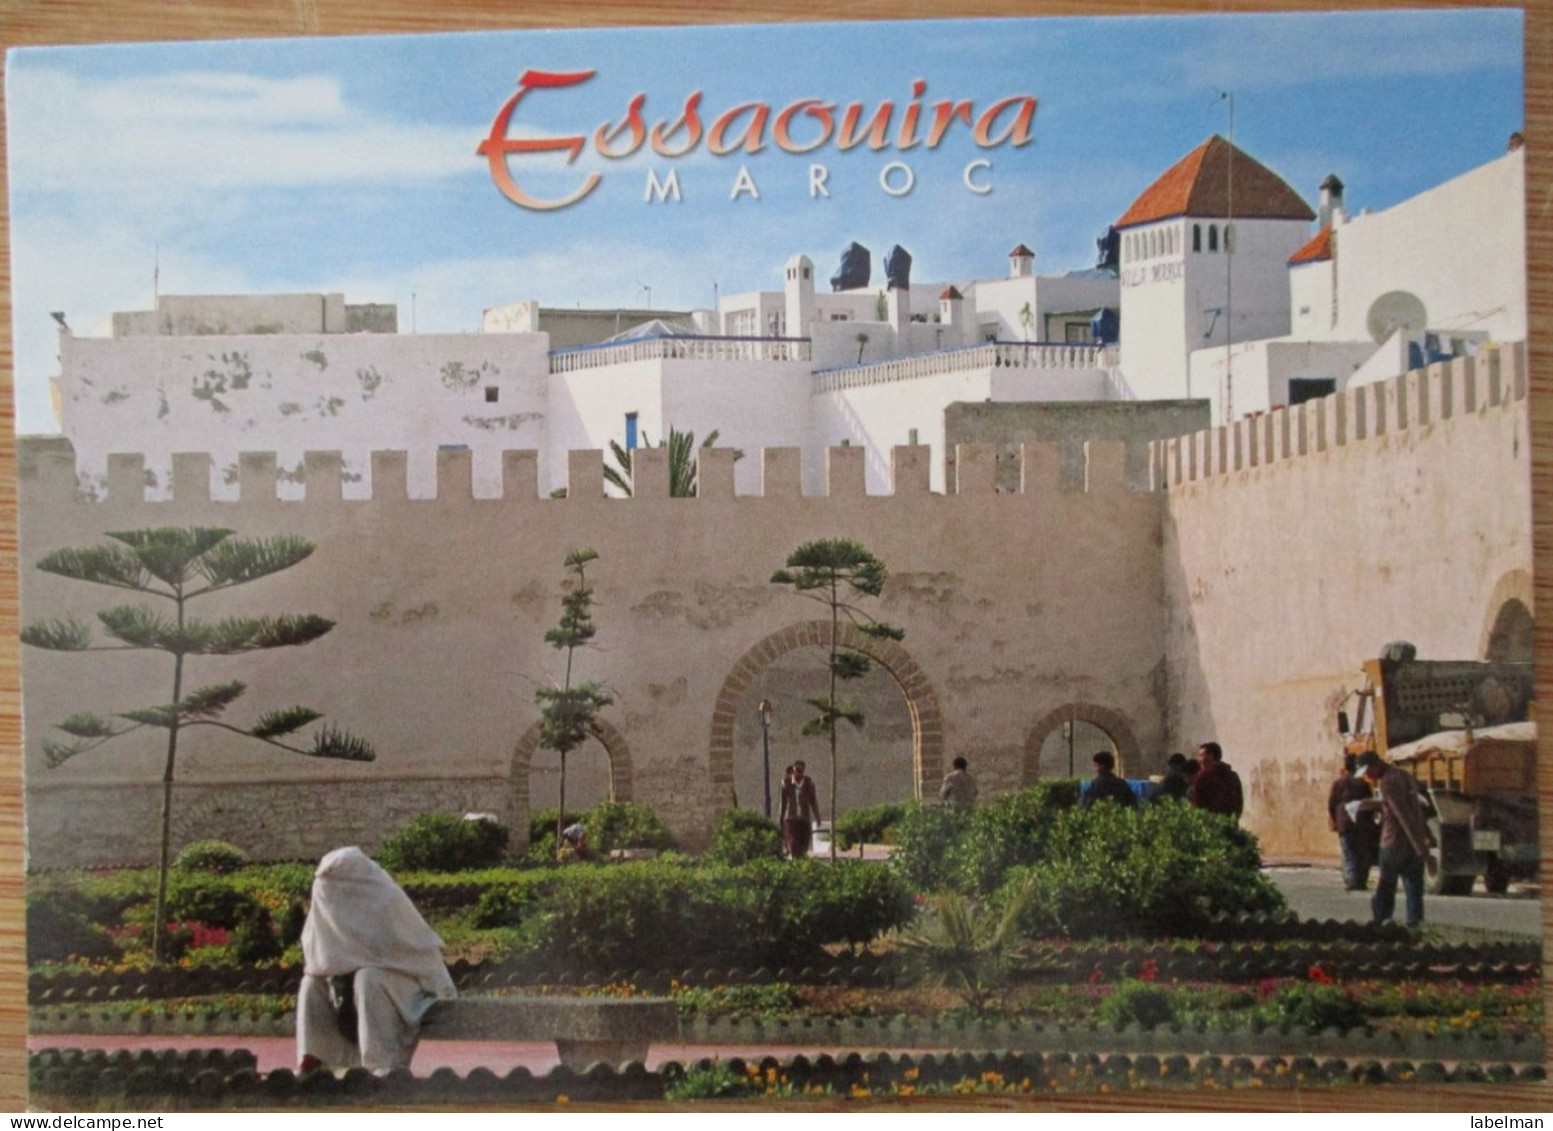 MAROC MOROCCO ESSAOUIRA CARTE POSTALE POSTCARD CARTOLINA KARTE PICTURE ANSICHTSKARTE CARD PHOTO POSTKARTE - Marrakesh